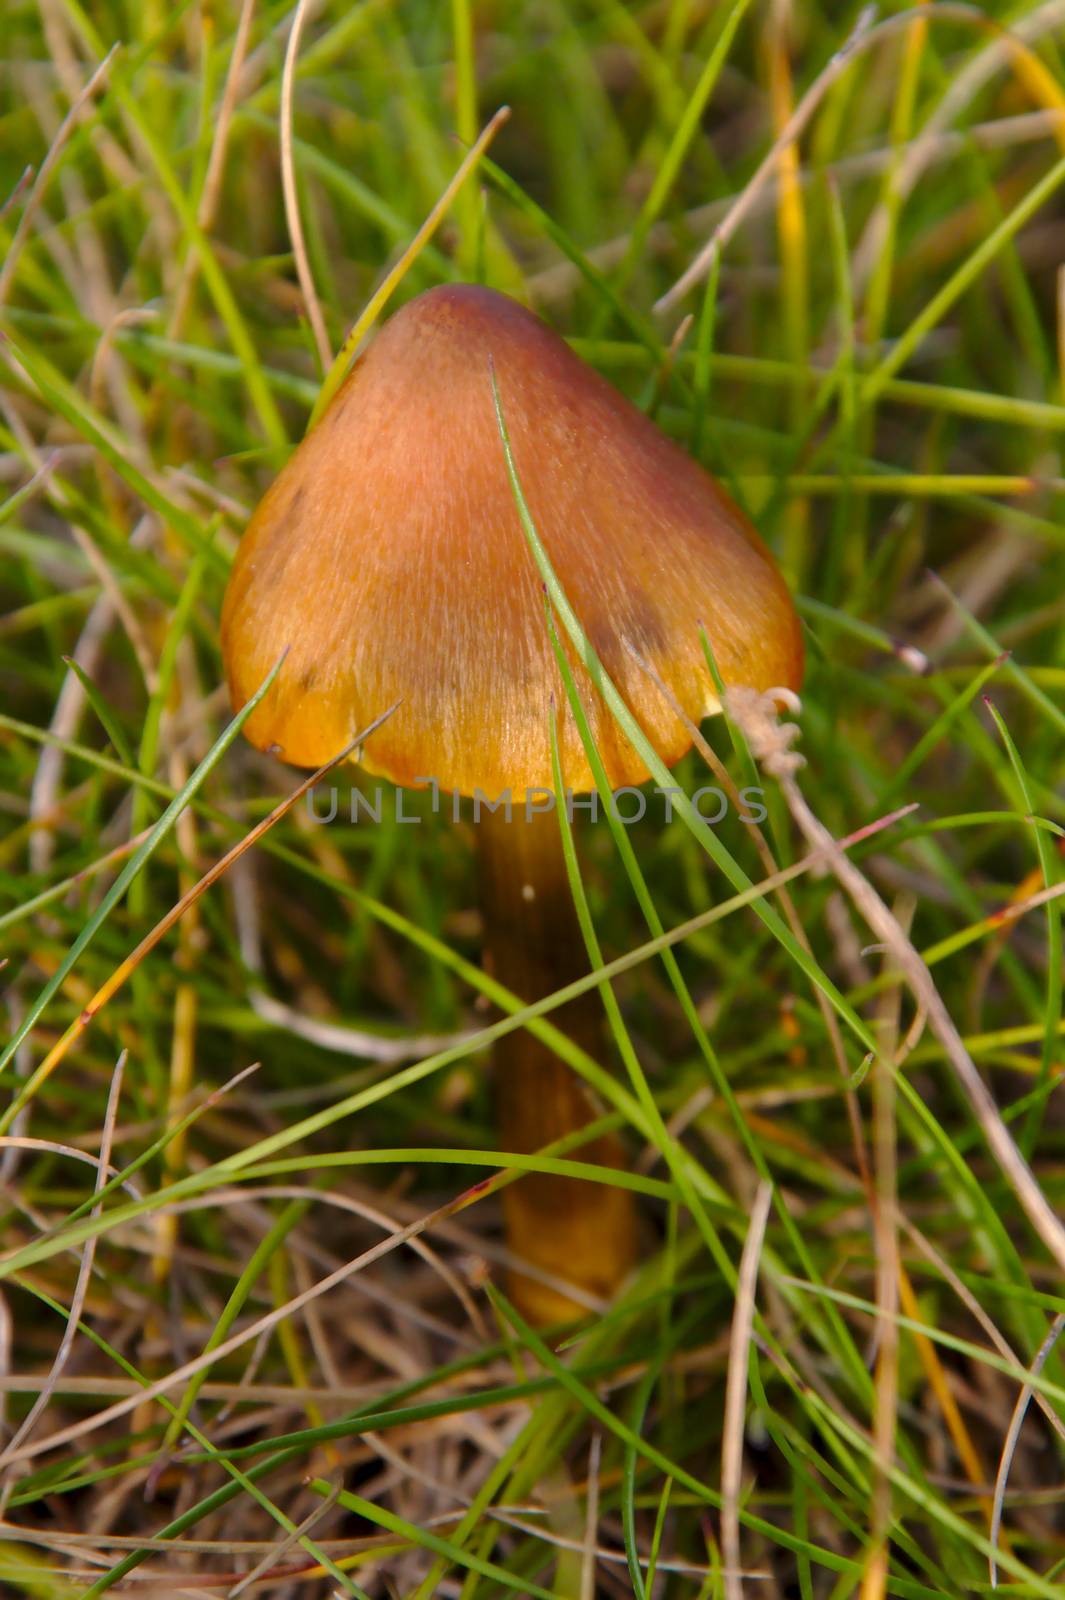 Brown triangle shaped cap mushroom growing in the grass during mushroom season.